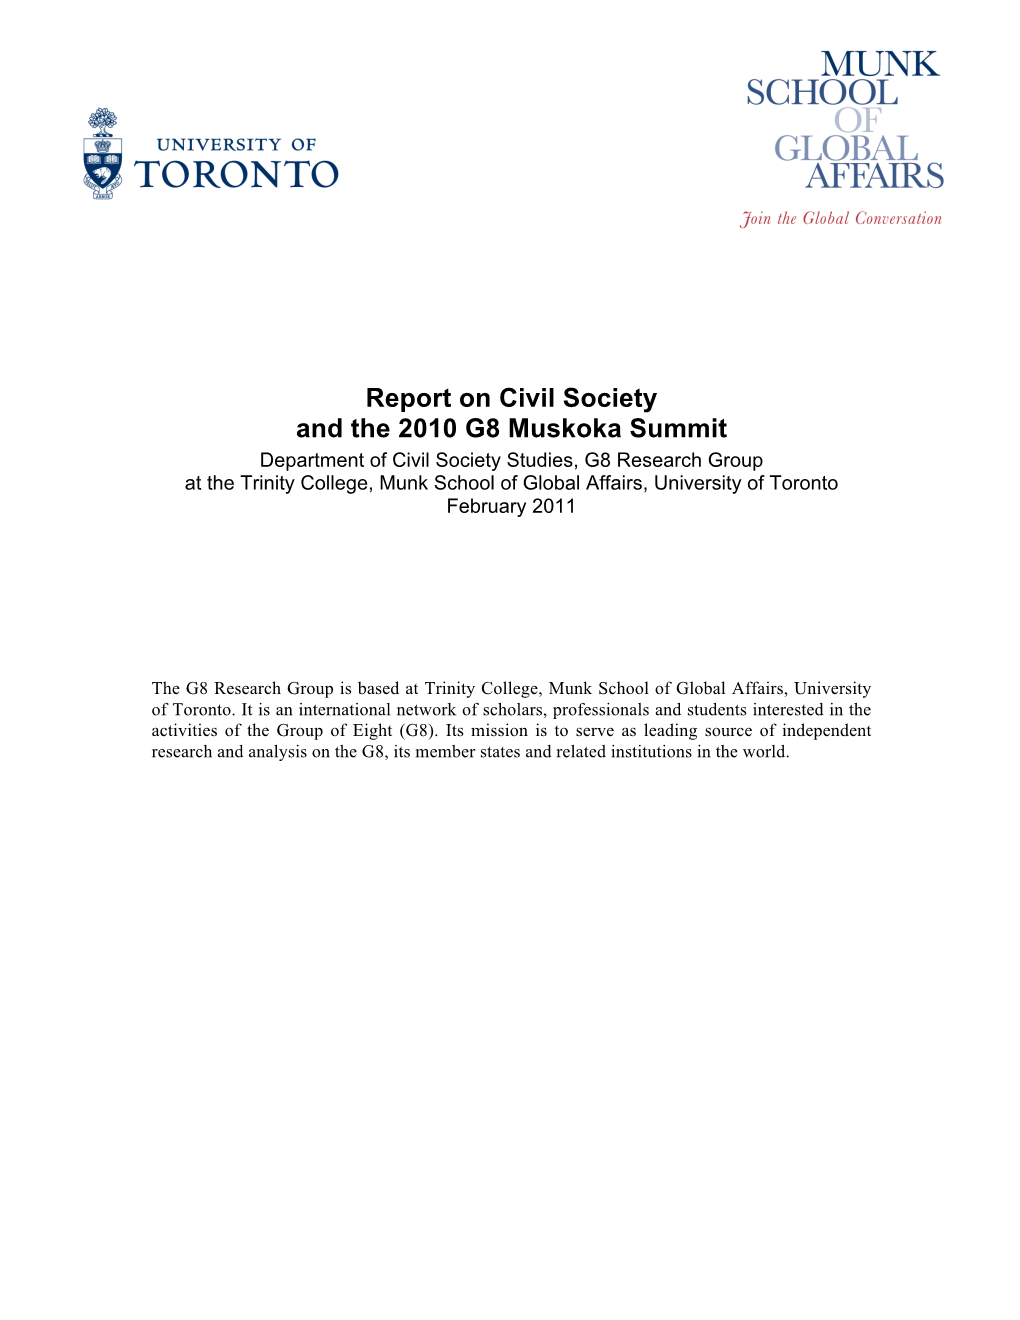 Report on Civil Society and the 2010 G8 Muskoka Summit